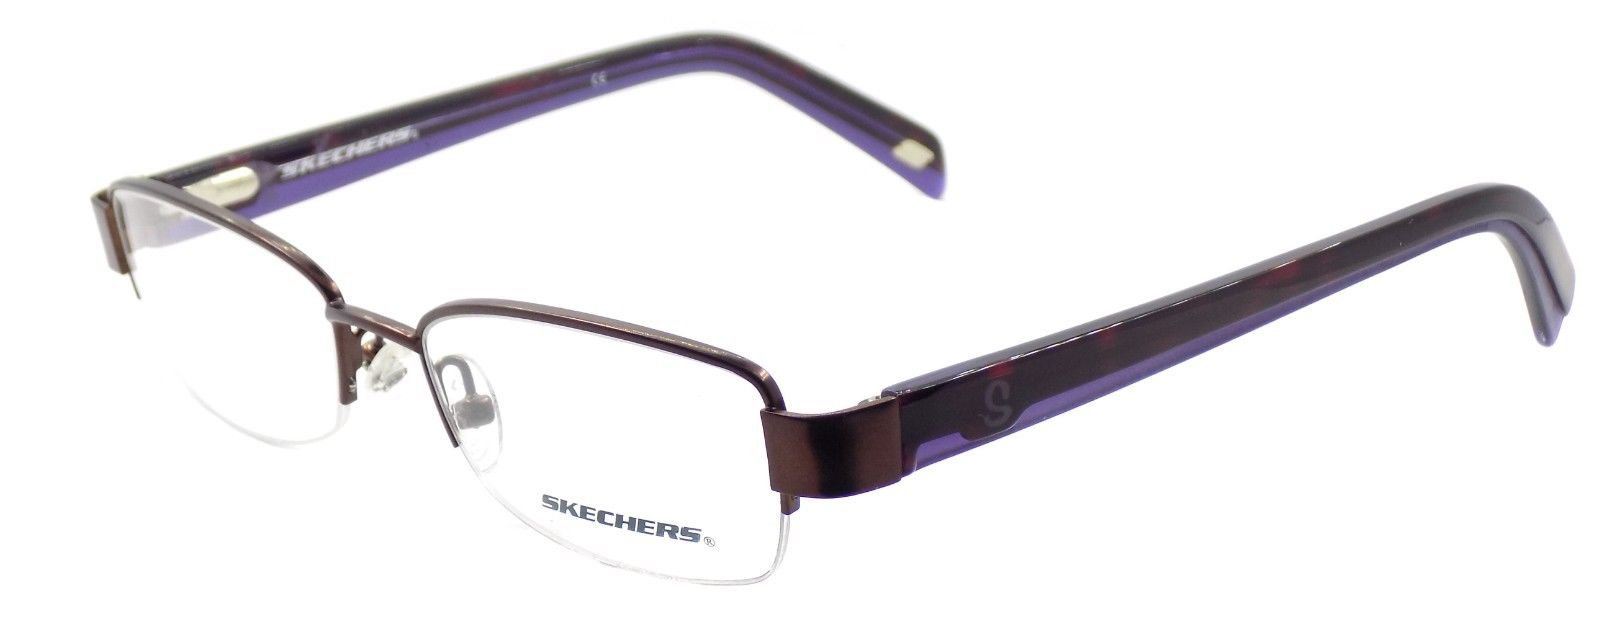 1-SKECHERS SK2084 SBRN Women's Eyeglasses Frames 49-17-135 Satin Brown + CASE-715583732650-IKSpecs